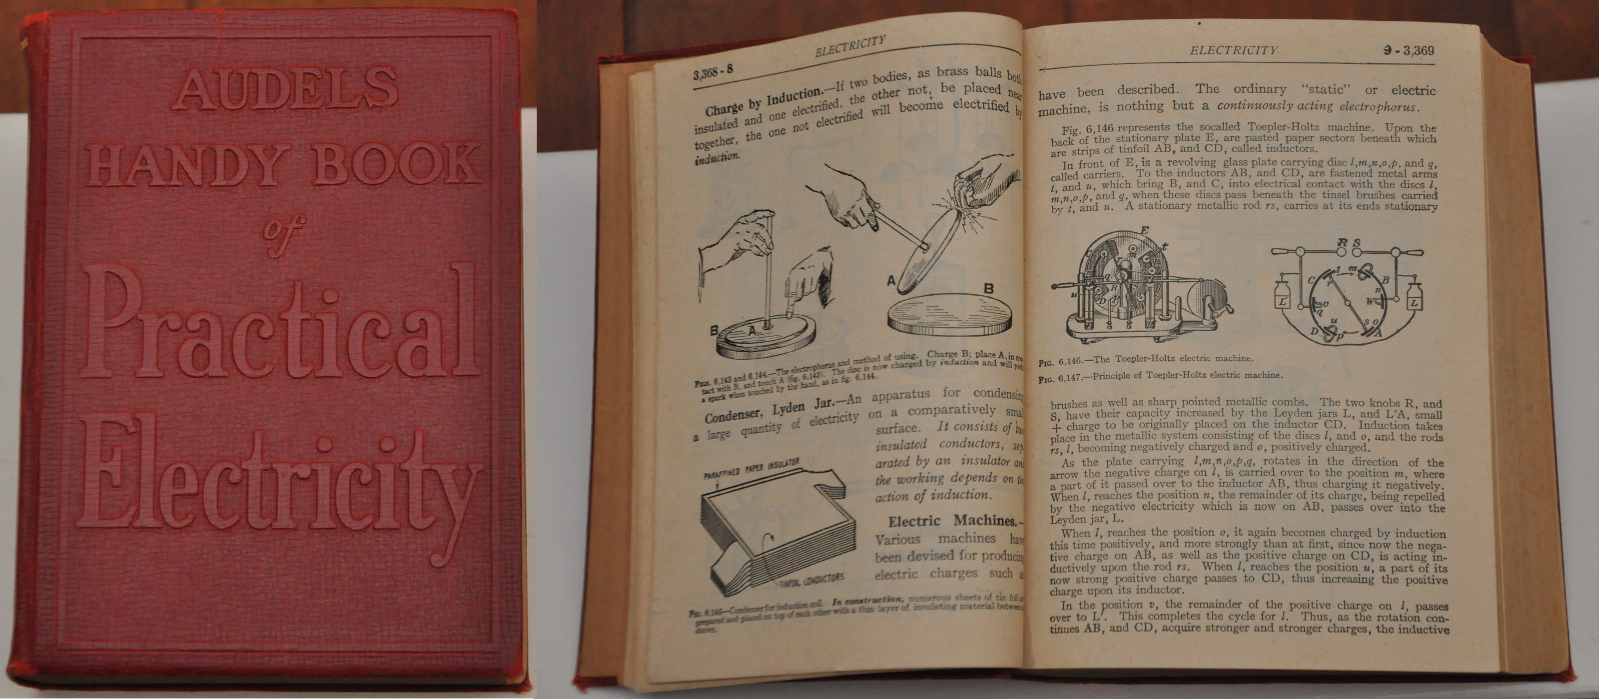 Audel's Handy Book of Practical Electricity